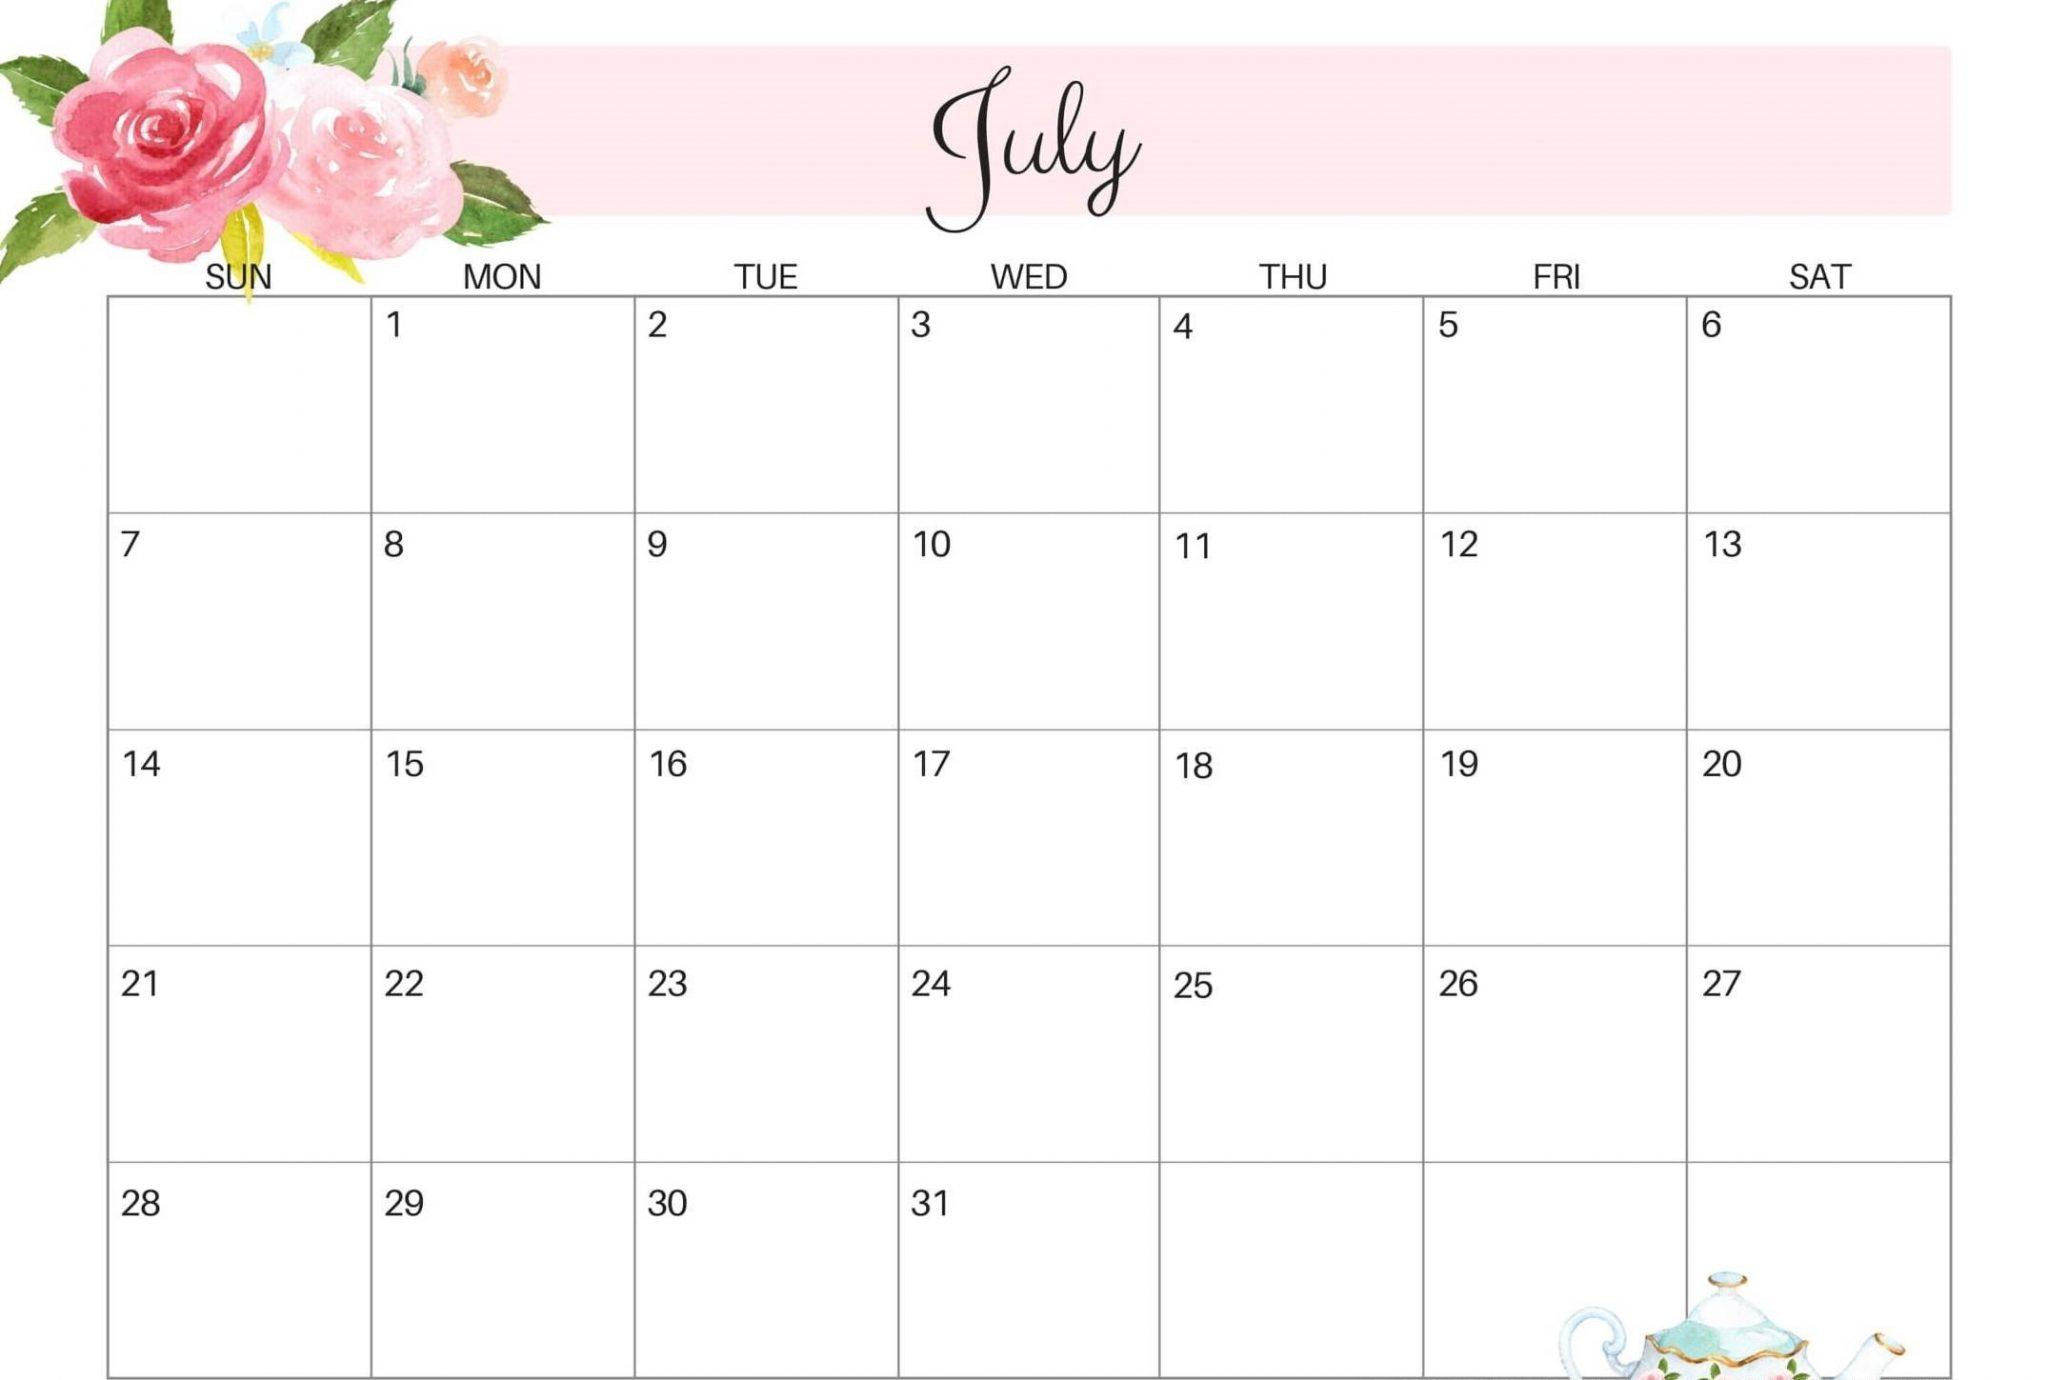 Cute July 2019 Calendar Wallpaper For Desk. Floral July Calendar